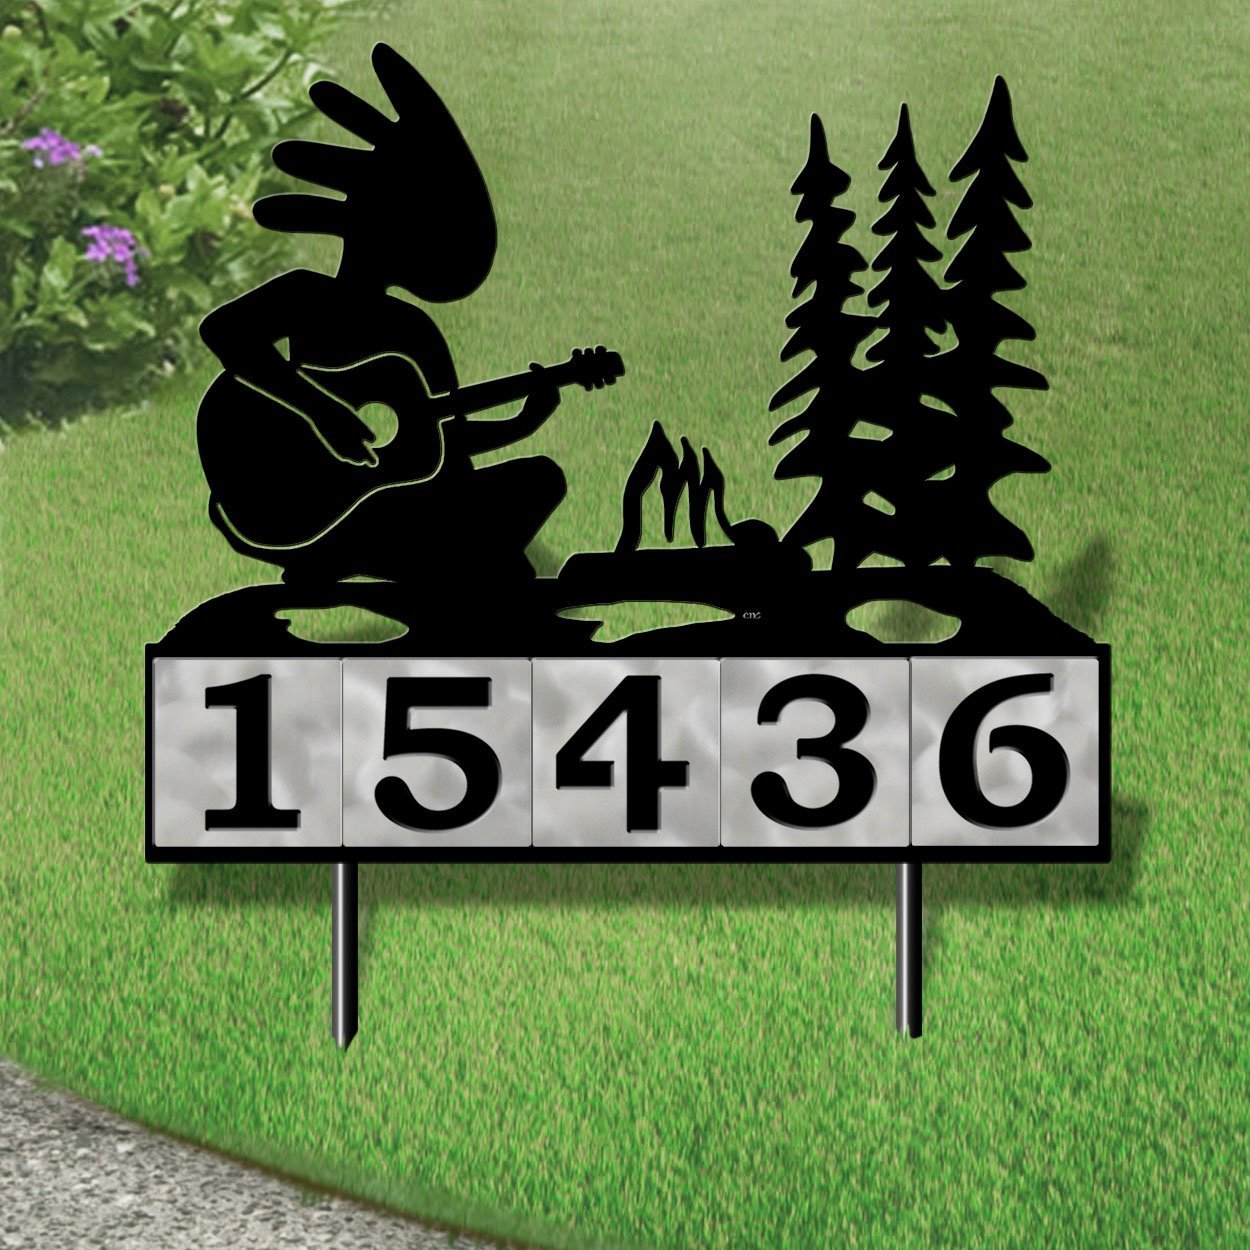 610125 - Camping Guitar Kokopelli Design 5-Digit Horizontal 6-inch Tile Outdoor House Numbers Yard Sign